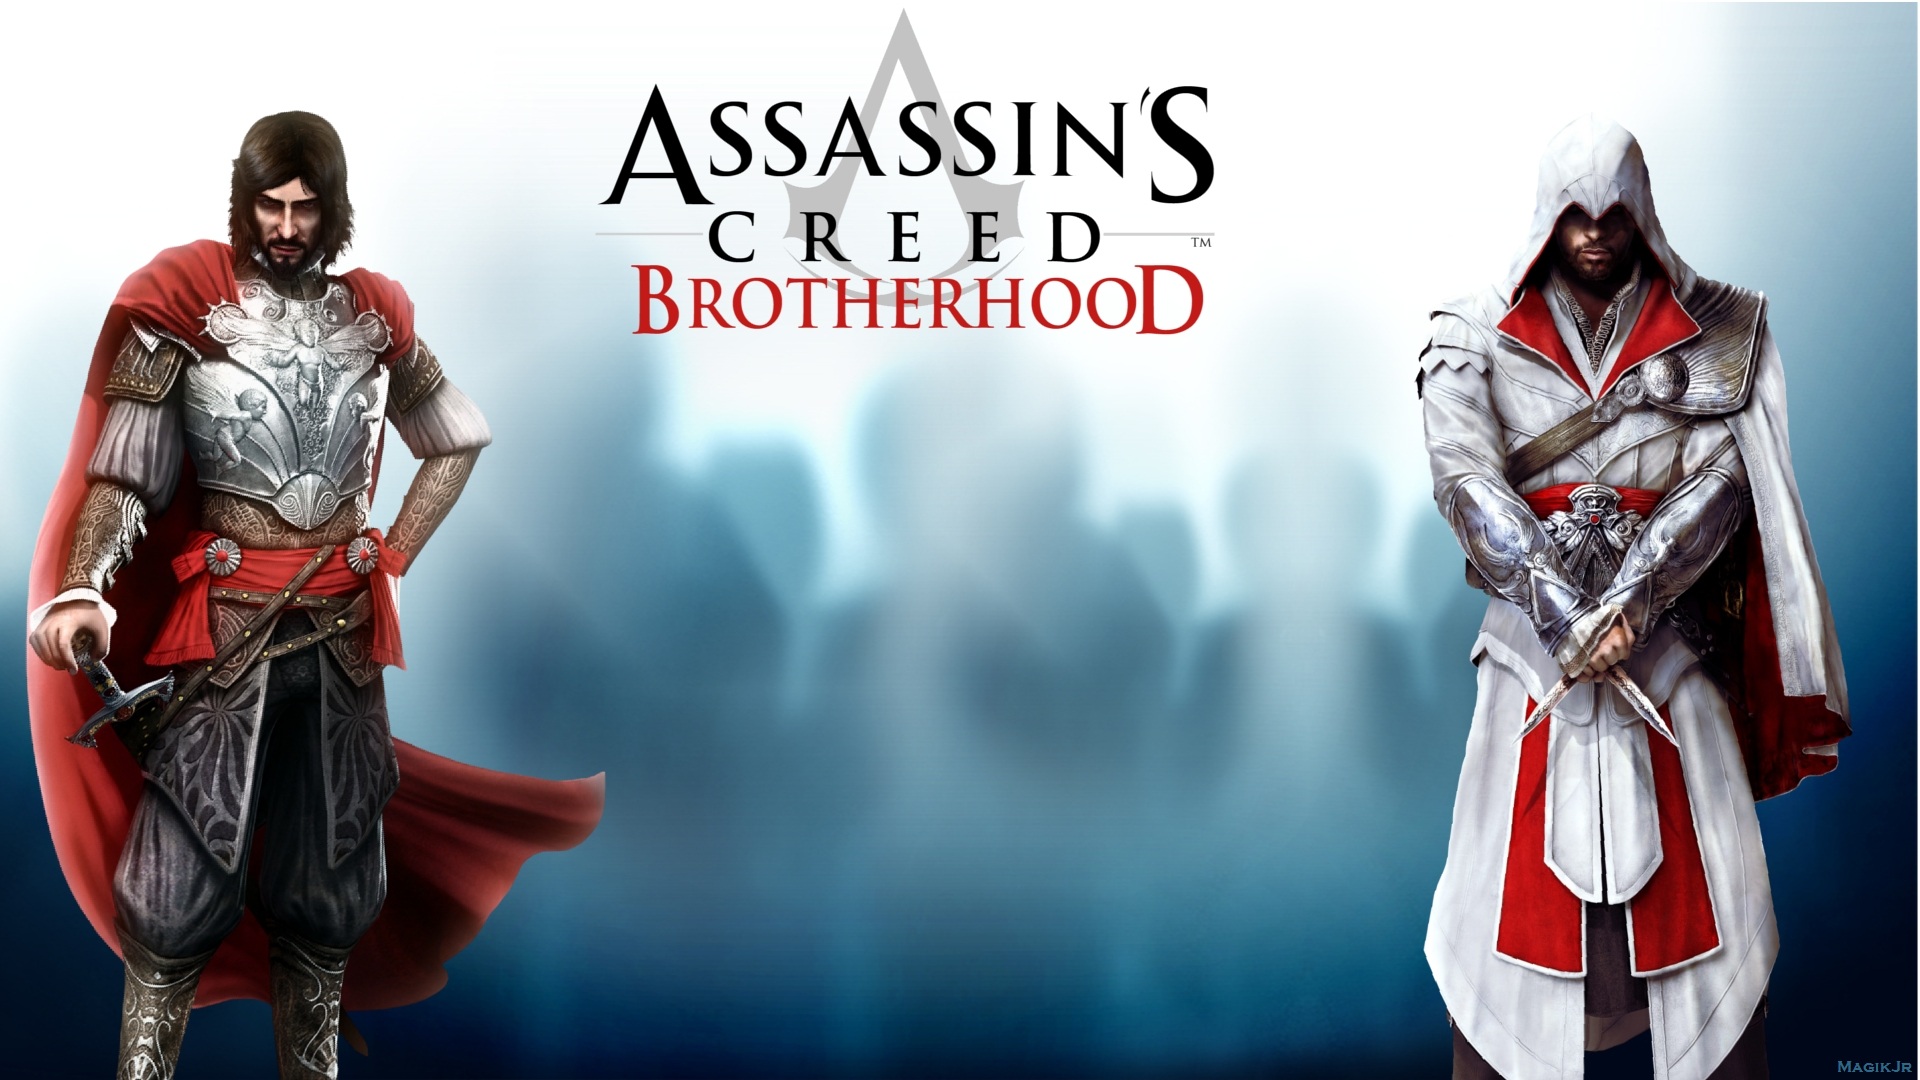 Brotherhood ii. Assassin's Creed братство крови обложка. Assassin s Creed 2 Brotherhood. Ассасин Крид бразерхуд 1080. Плакат ассасин Крид братство крови.